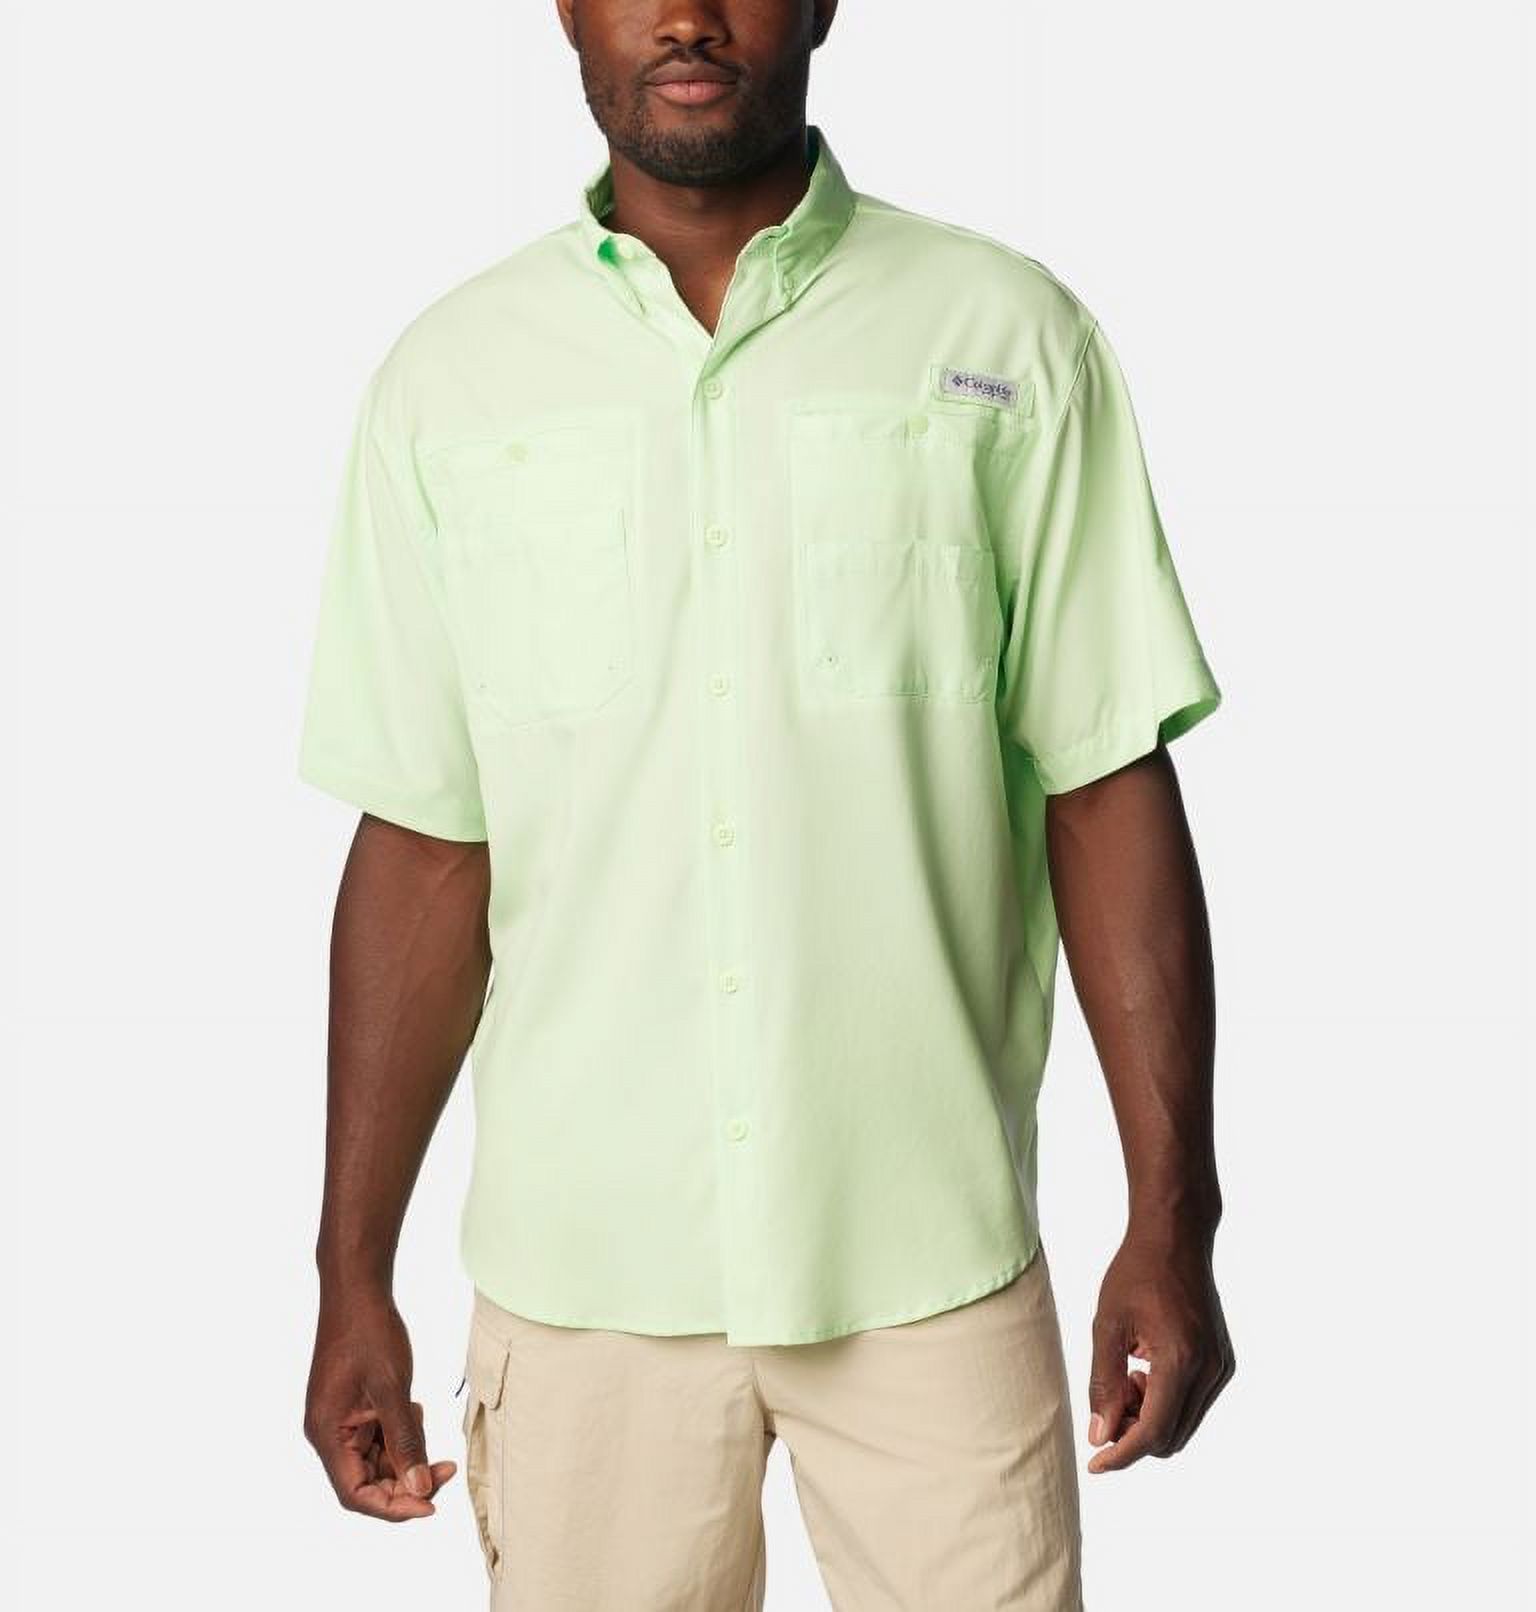 Mens PFG Tamiami II Short Sleeve Shirt - image 1 of 3